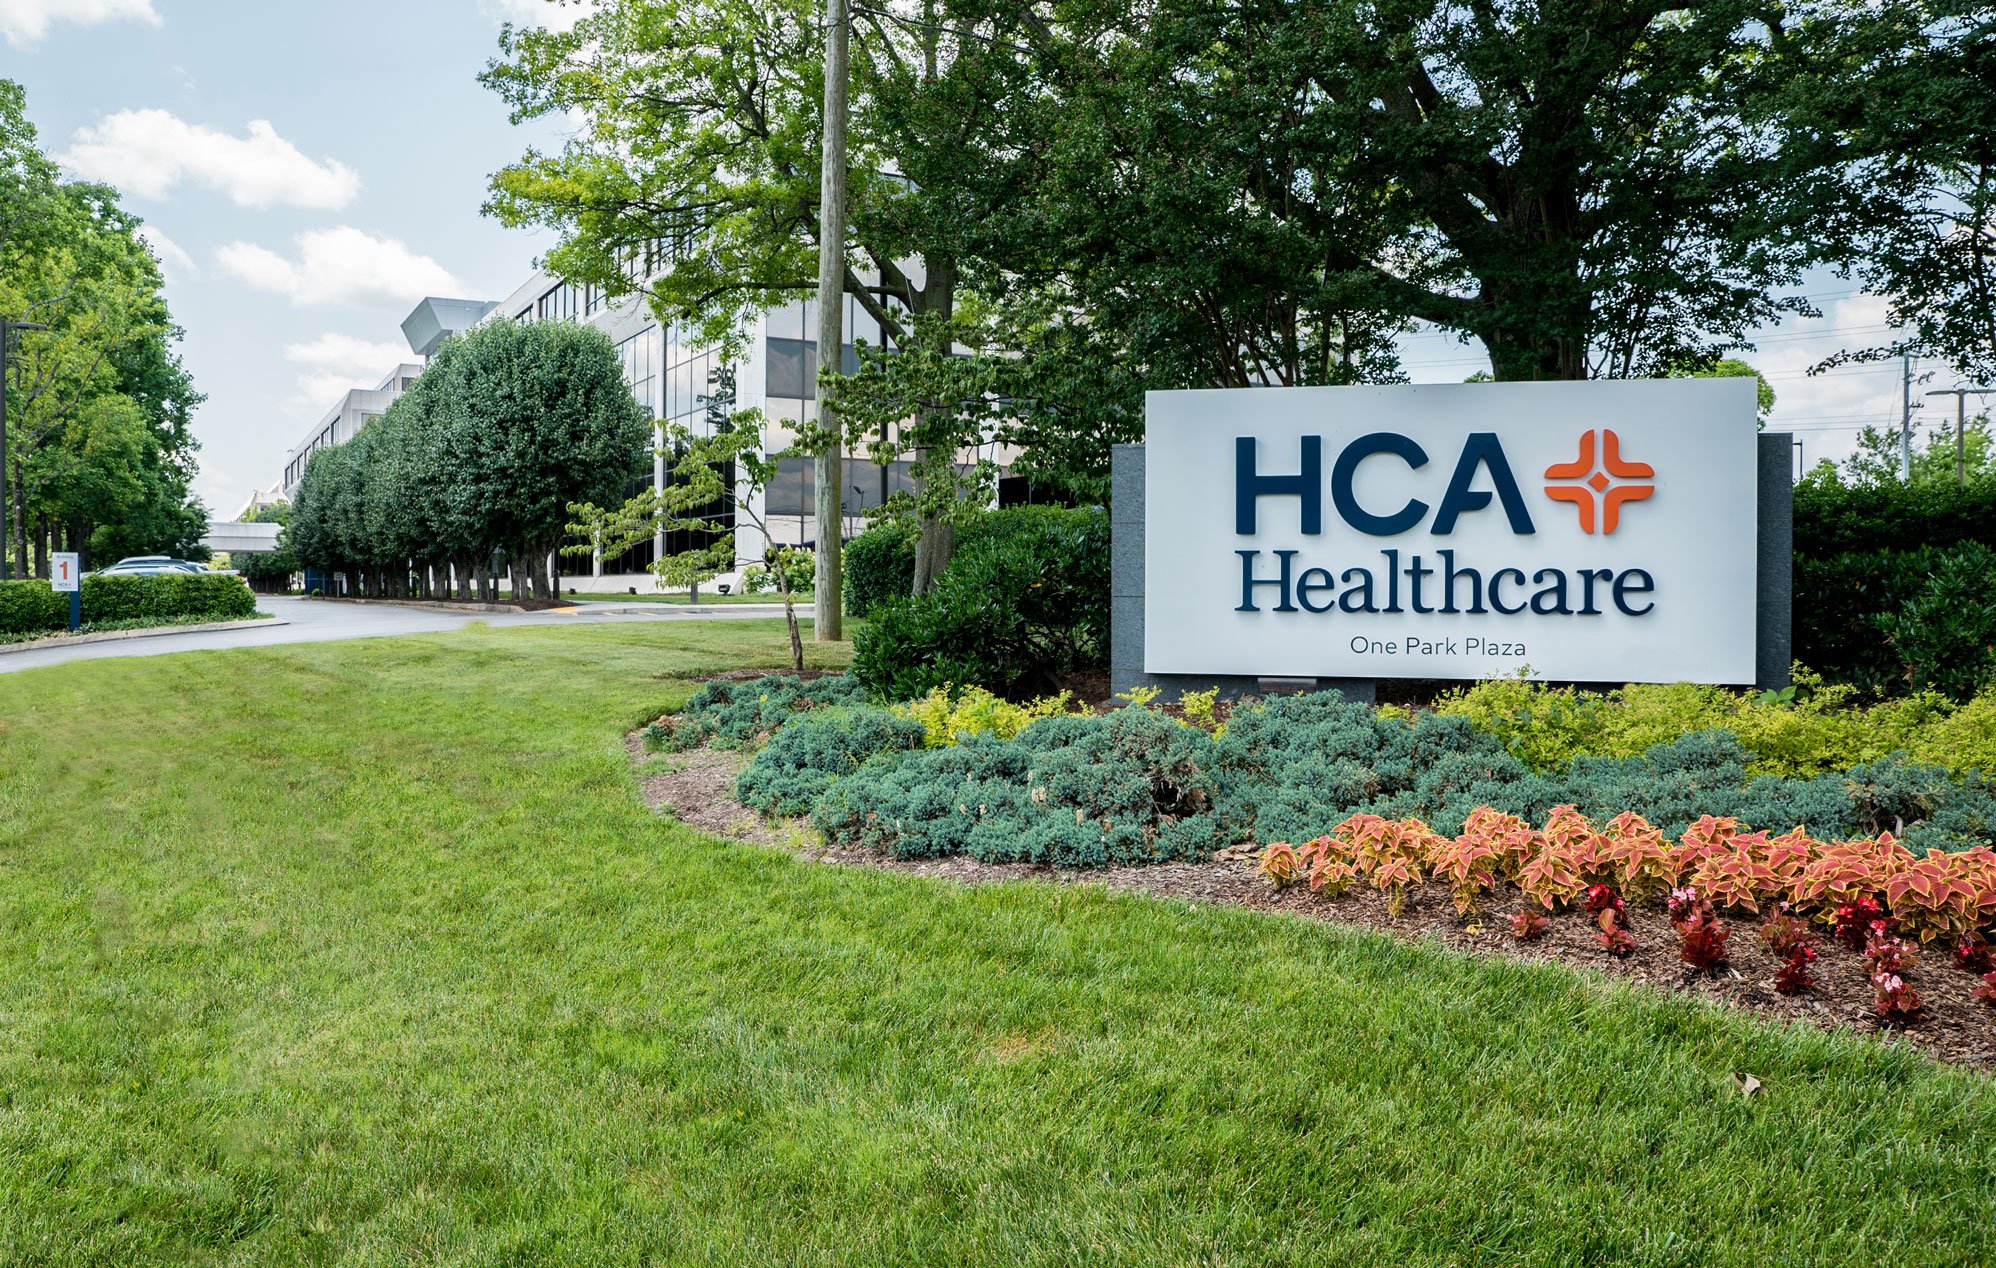 HCA Healthcare will build 3 hospitals in Florida